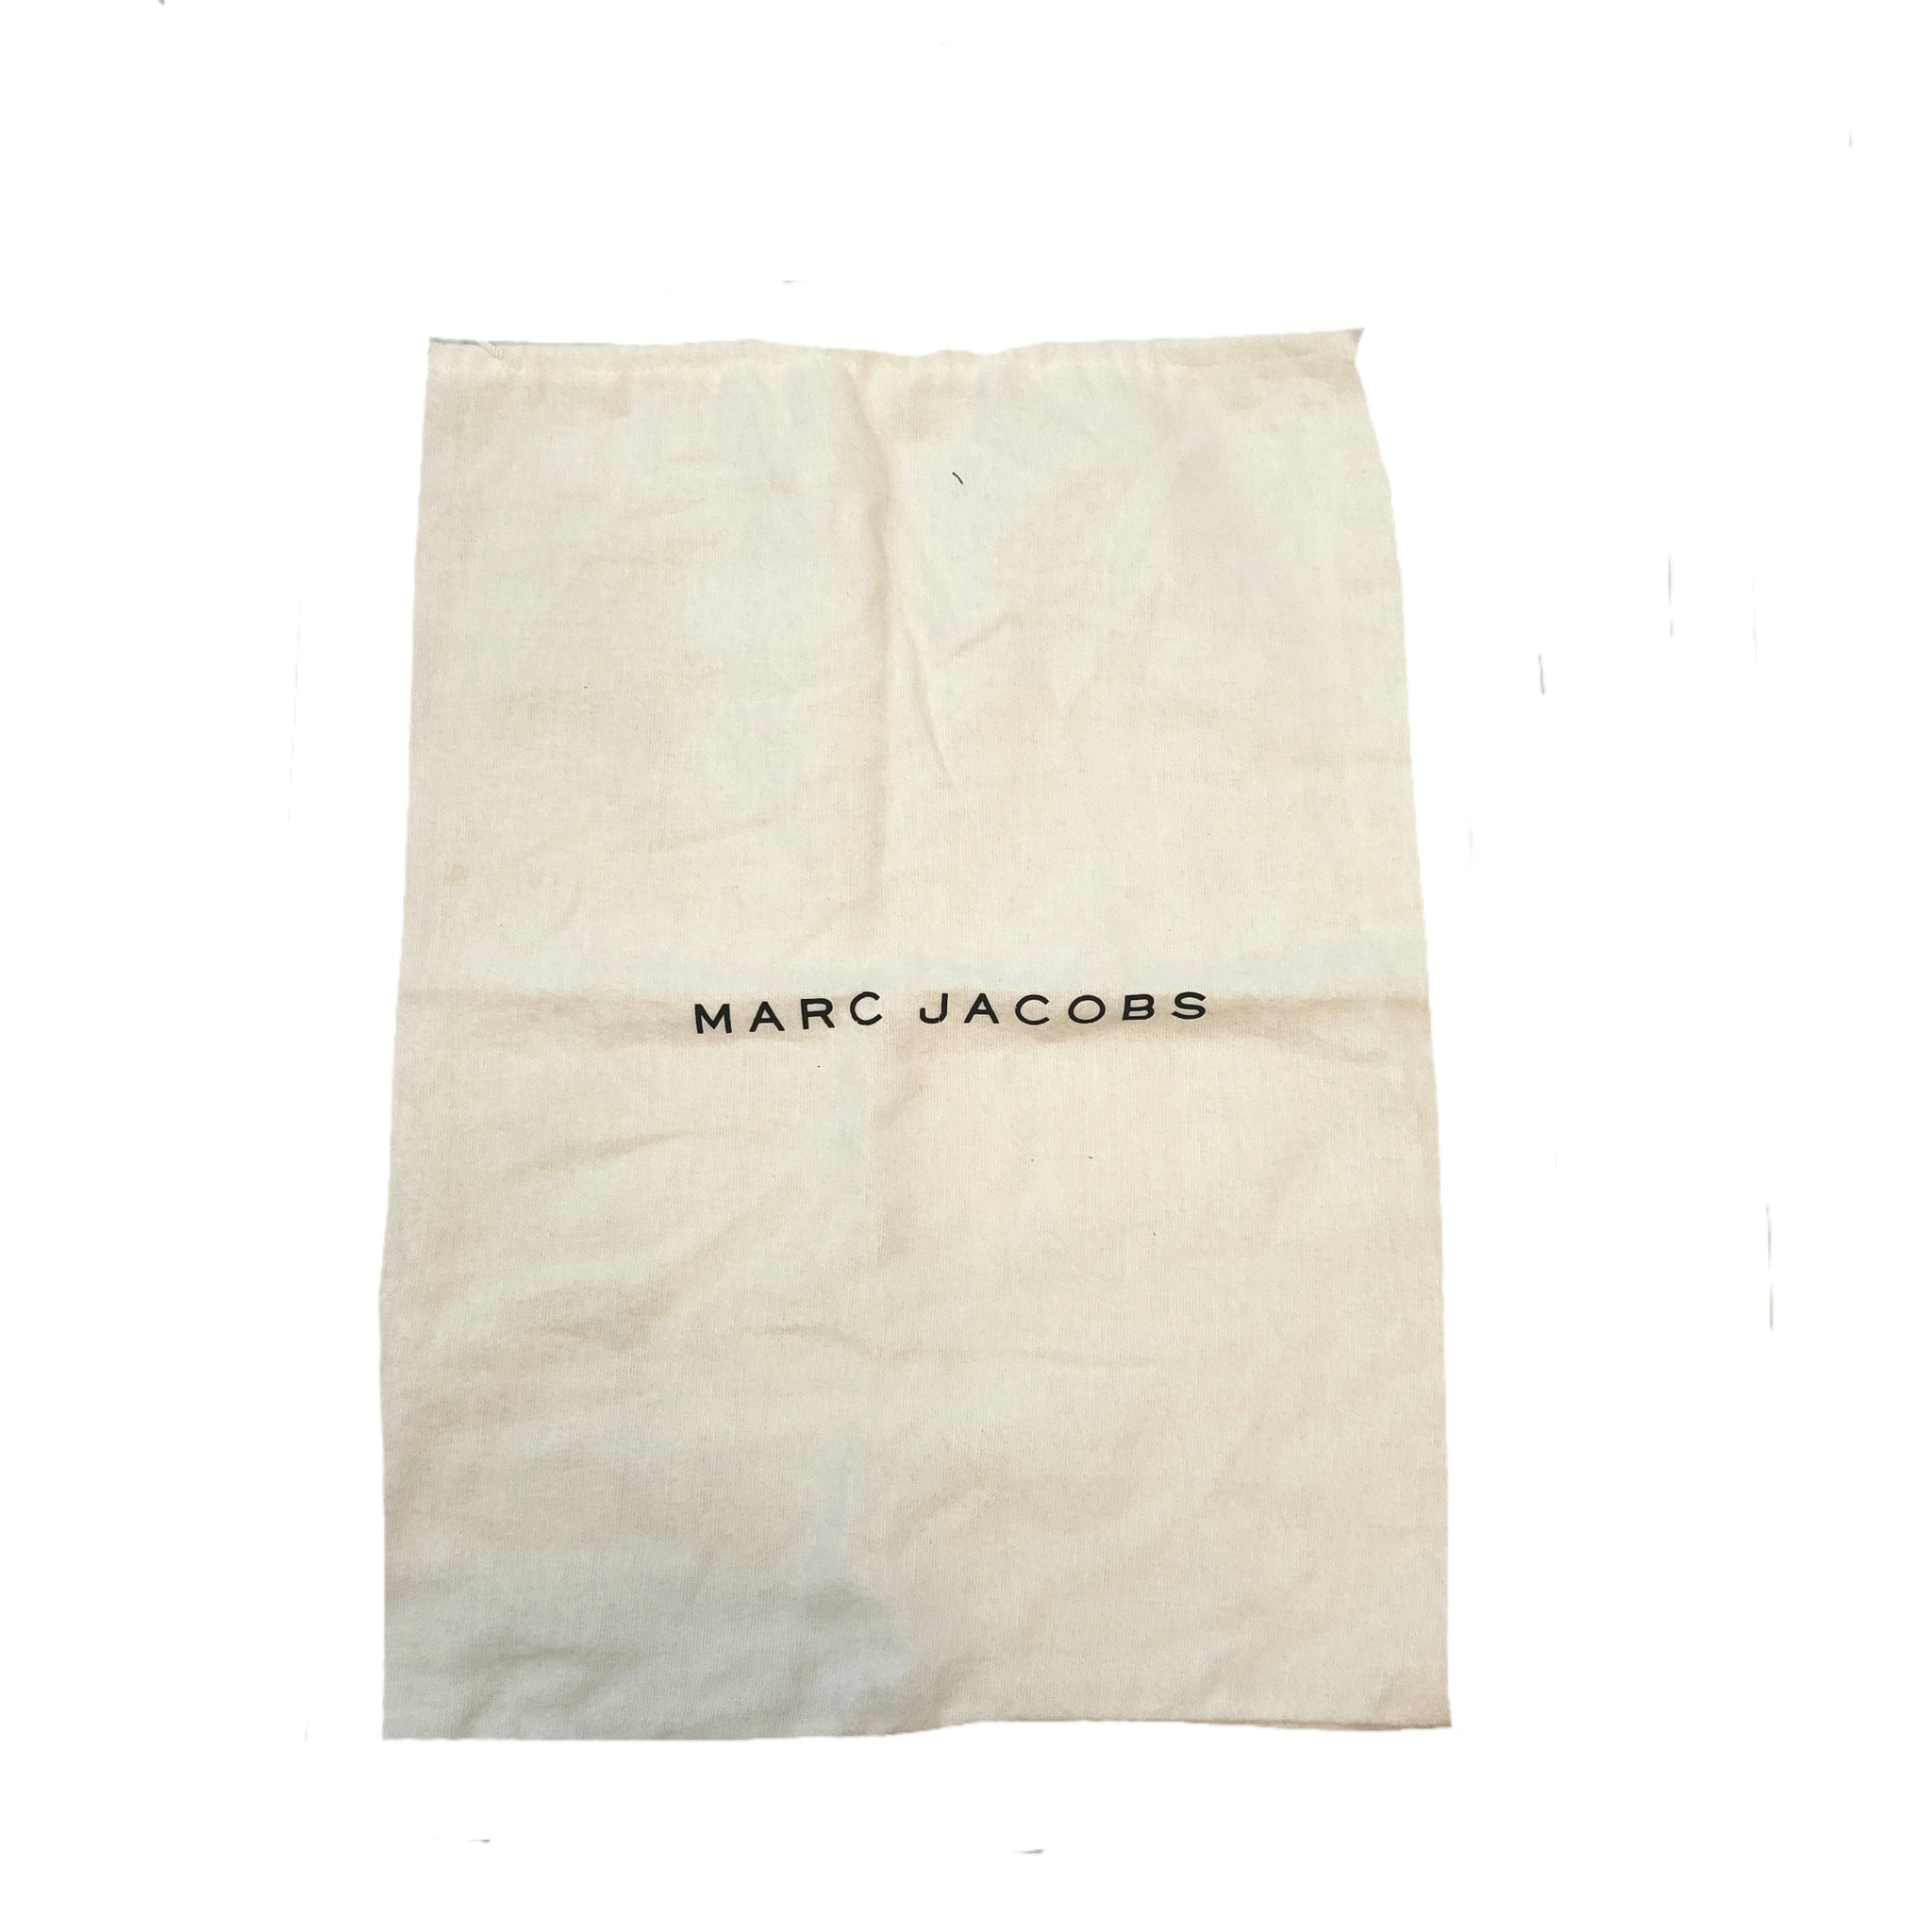 Dustbag Marc Jacobs